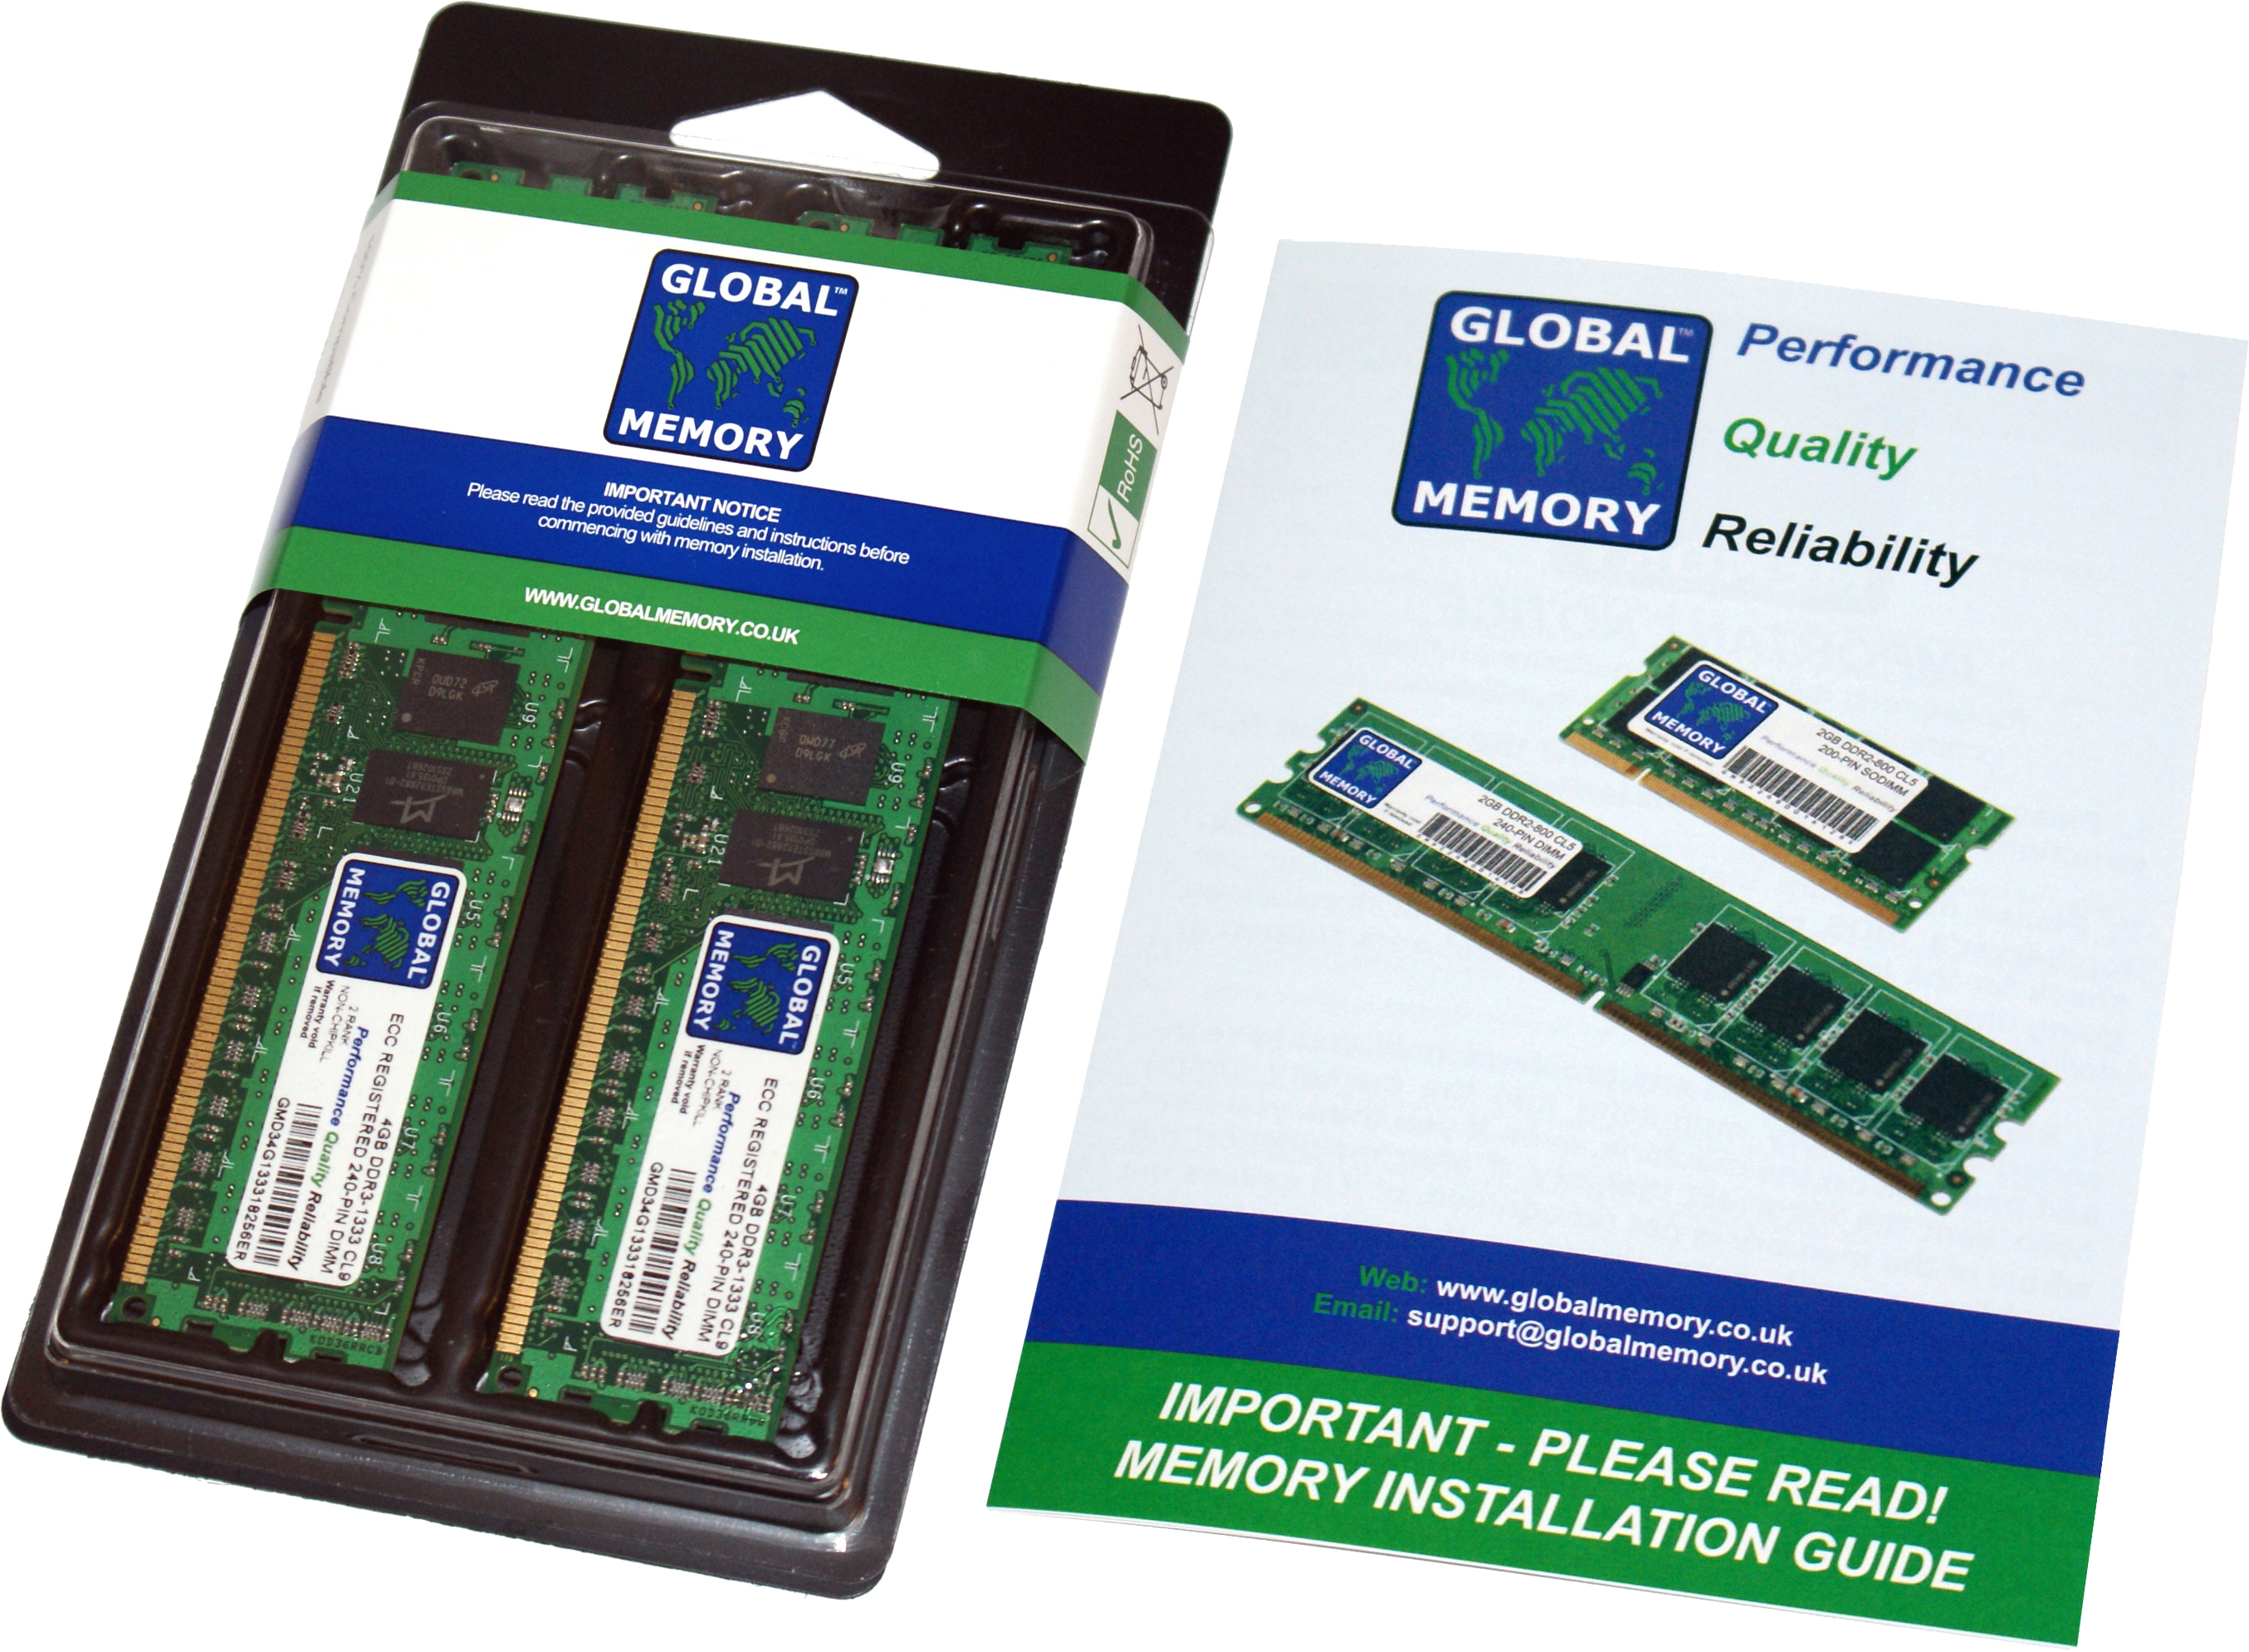 32GB (2 x 16GB) DDR4 2933MHz PC4-23400 288-PIN ECC REGISTERED DIMM (RDIMM) MEMORY RAM KIT FOR FUJITSU SERVERS/WORKSTATIONS (4 RANK KIT CHIPKILL)